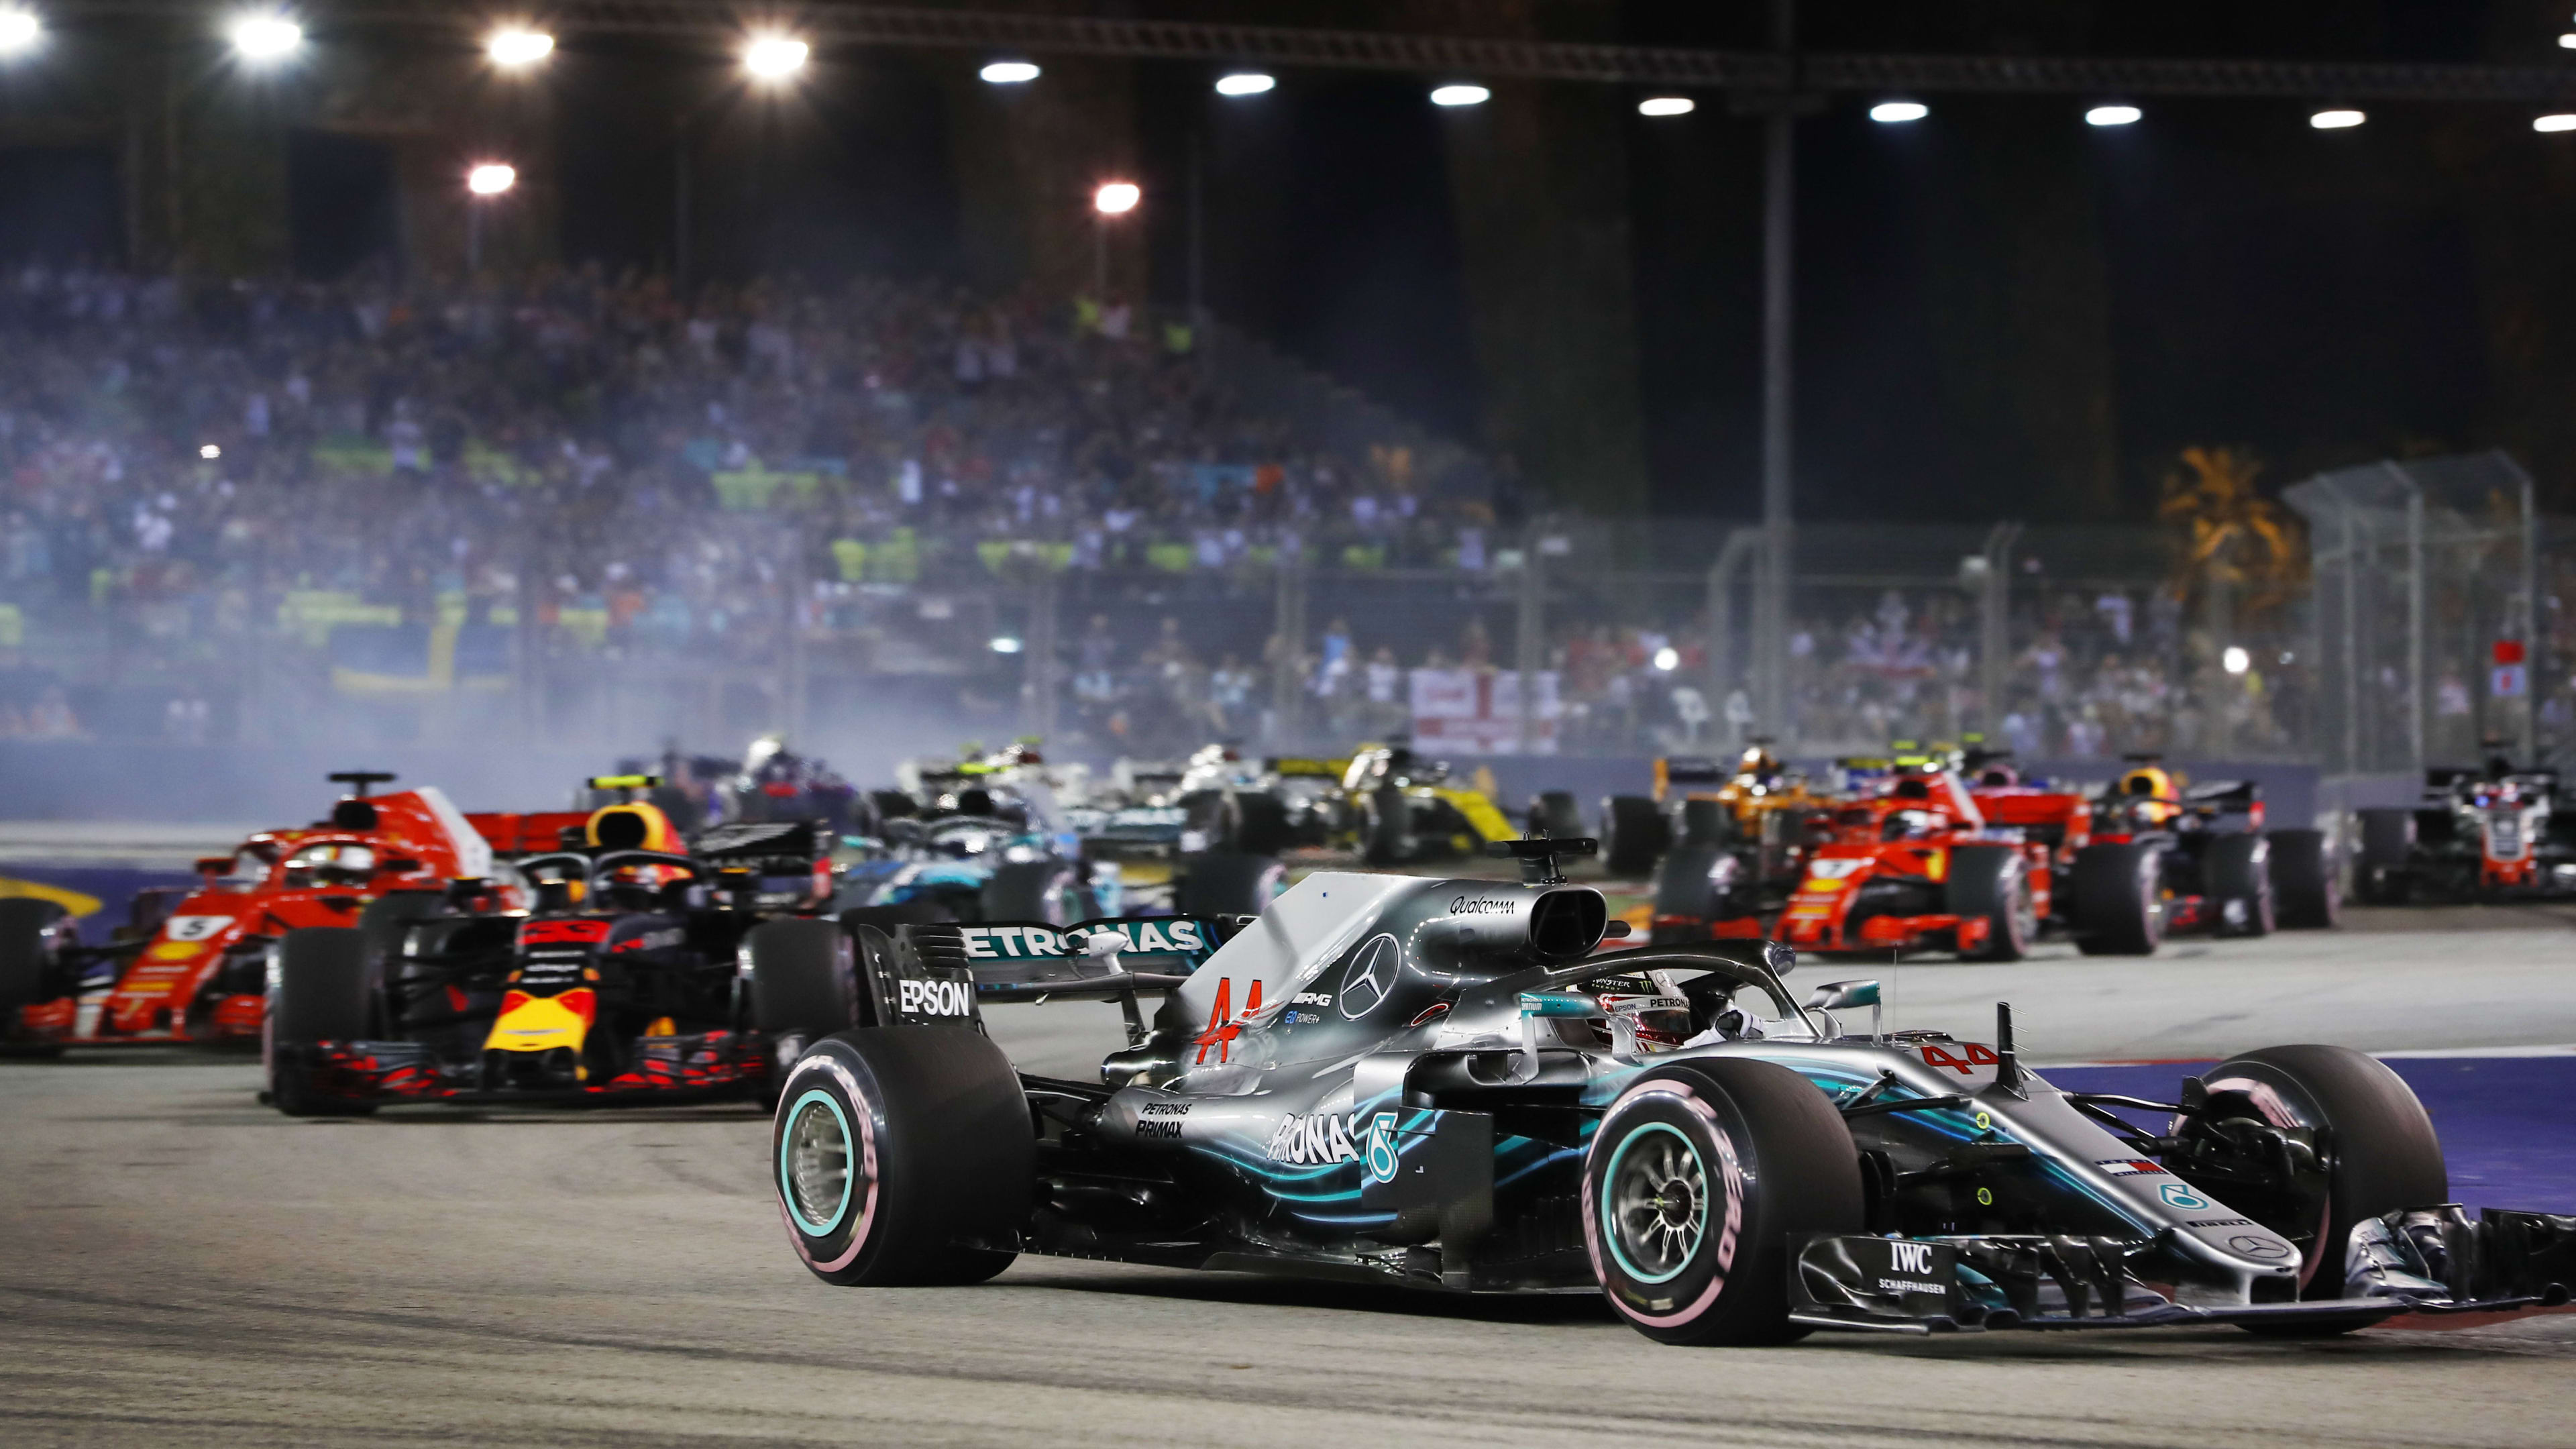 Best F1 race of 2018 vote | Formula 1®